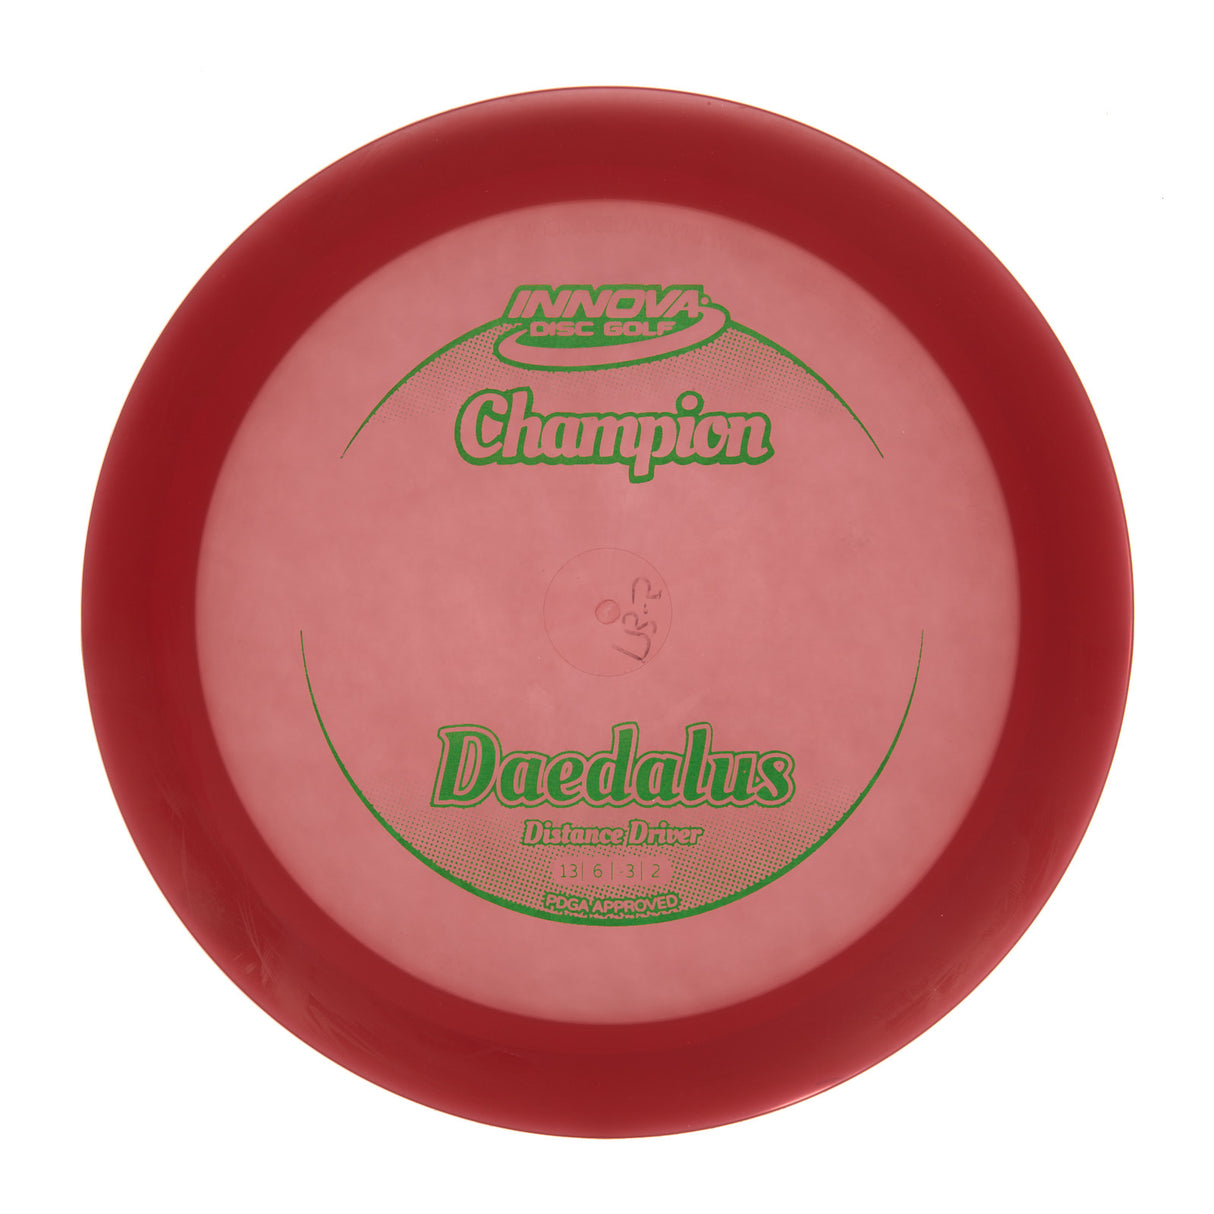 Innova Daedalus - Champion 175g | Style 0002